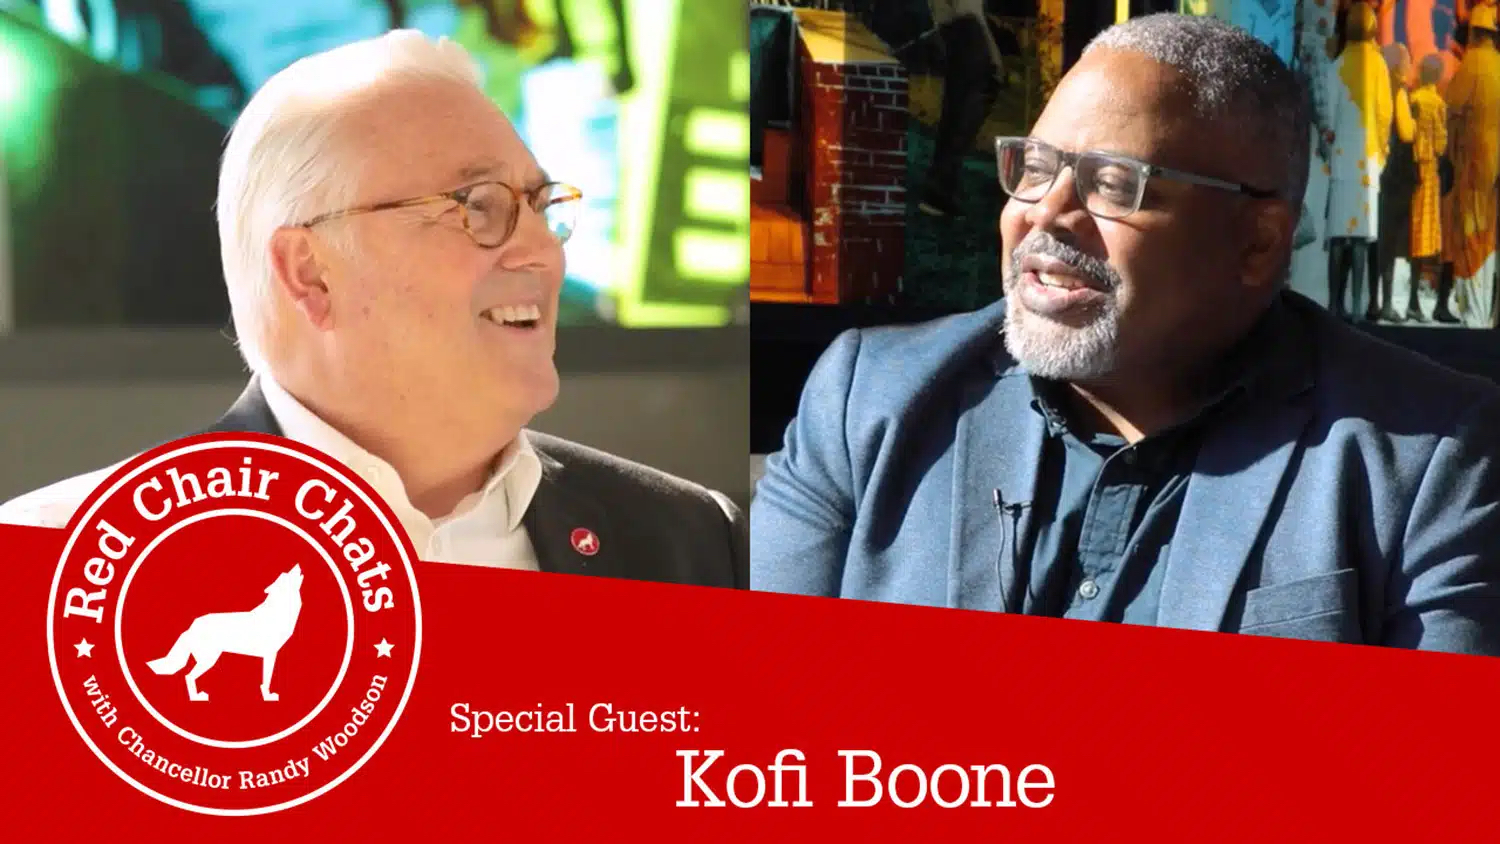 Chancellor Woodson and Professor Kofi Boone